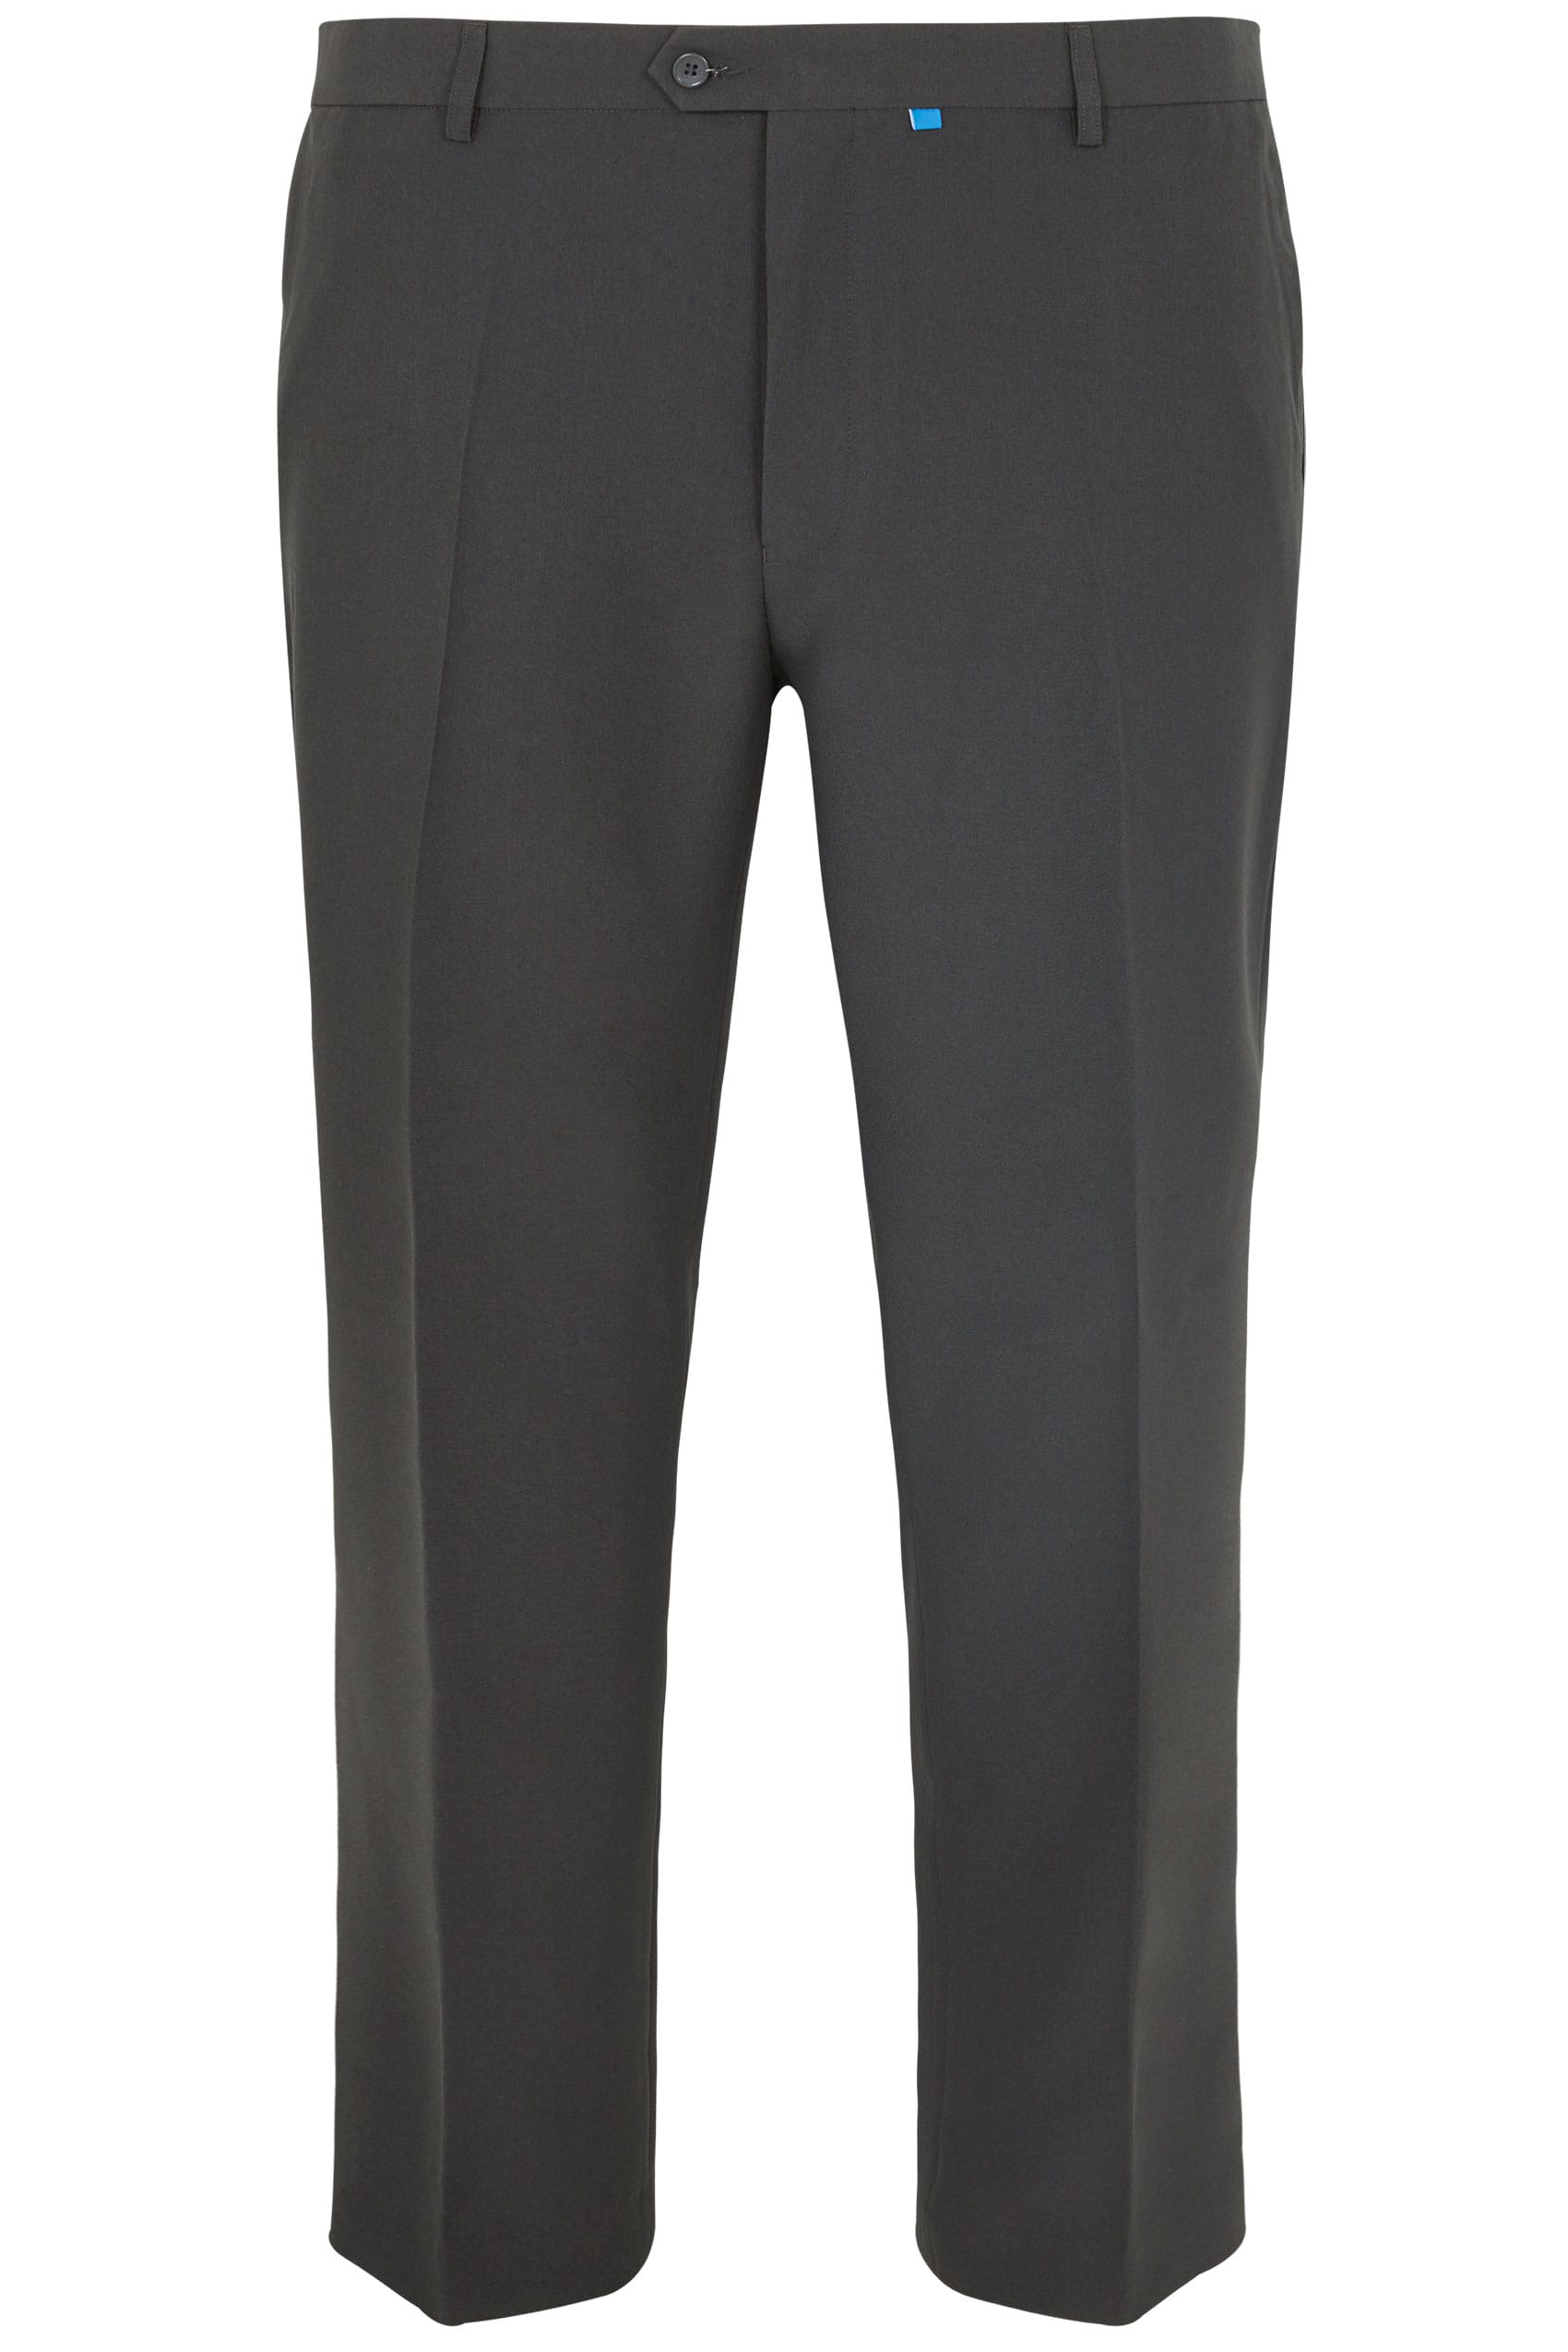 BadRhino Grey Single Pleat Smart Trousers | BadRhino